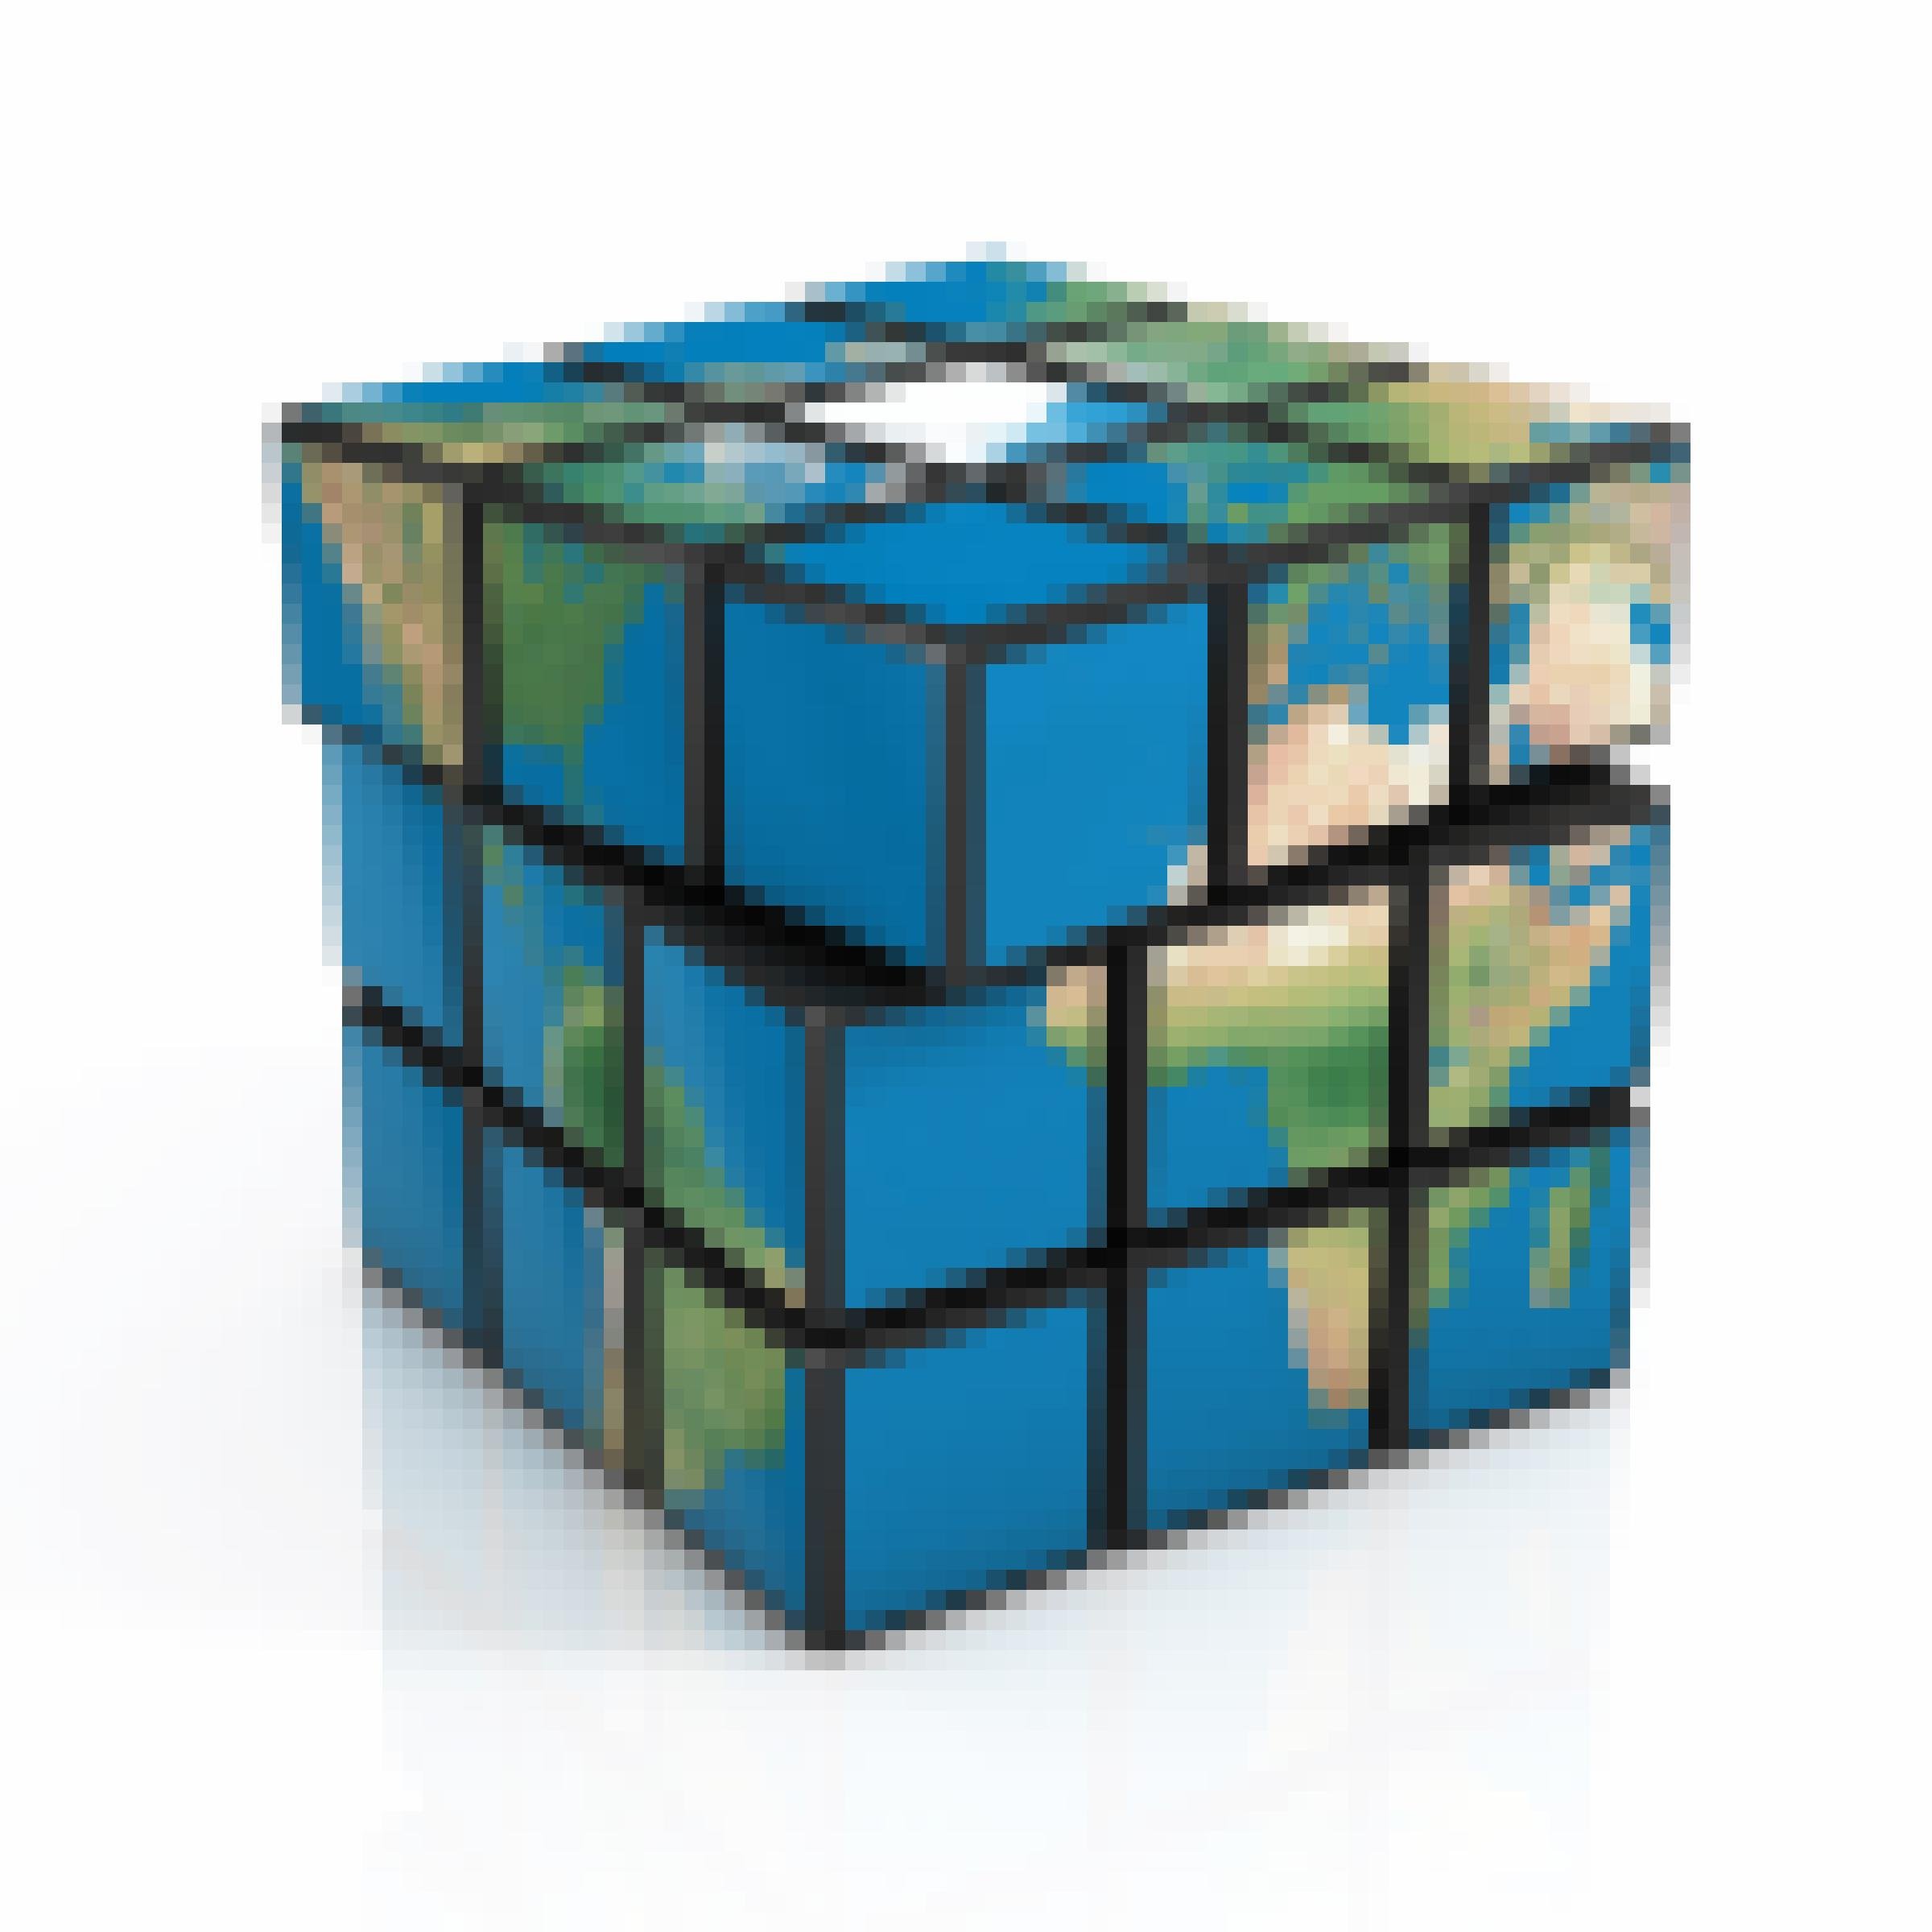 Die Erde ist als Rubik’s Cube dargestellt.